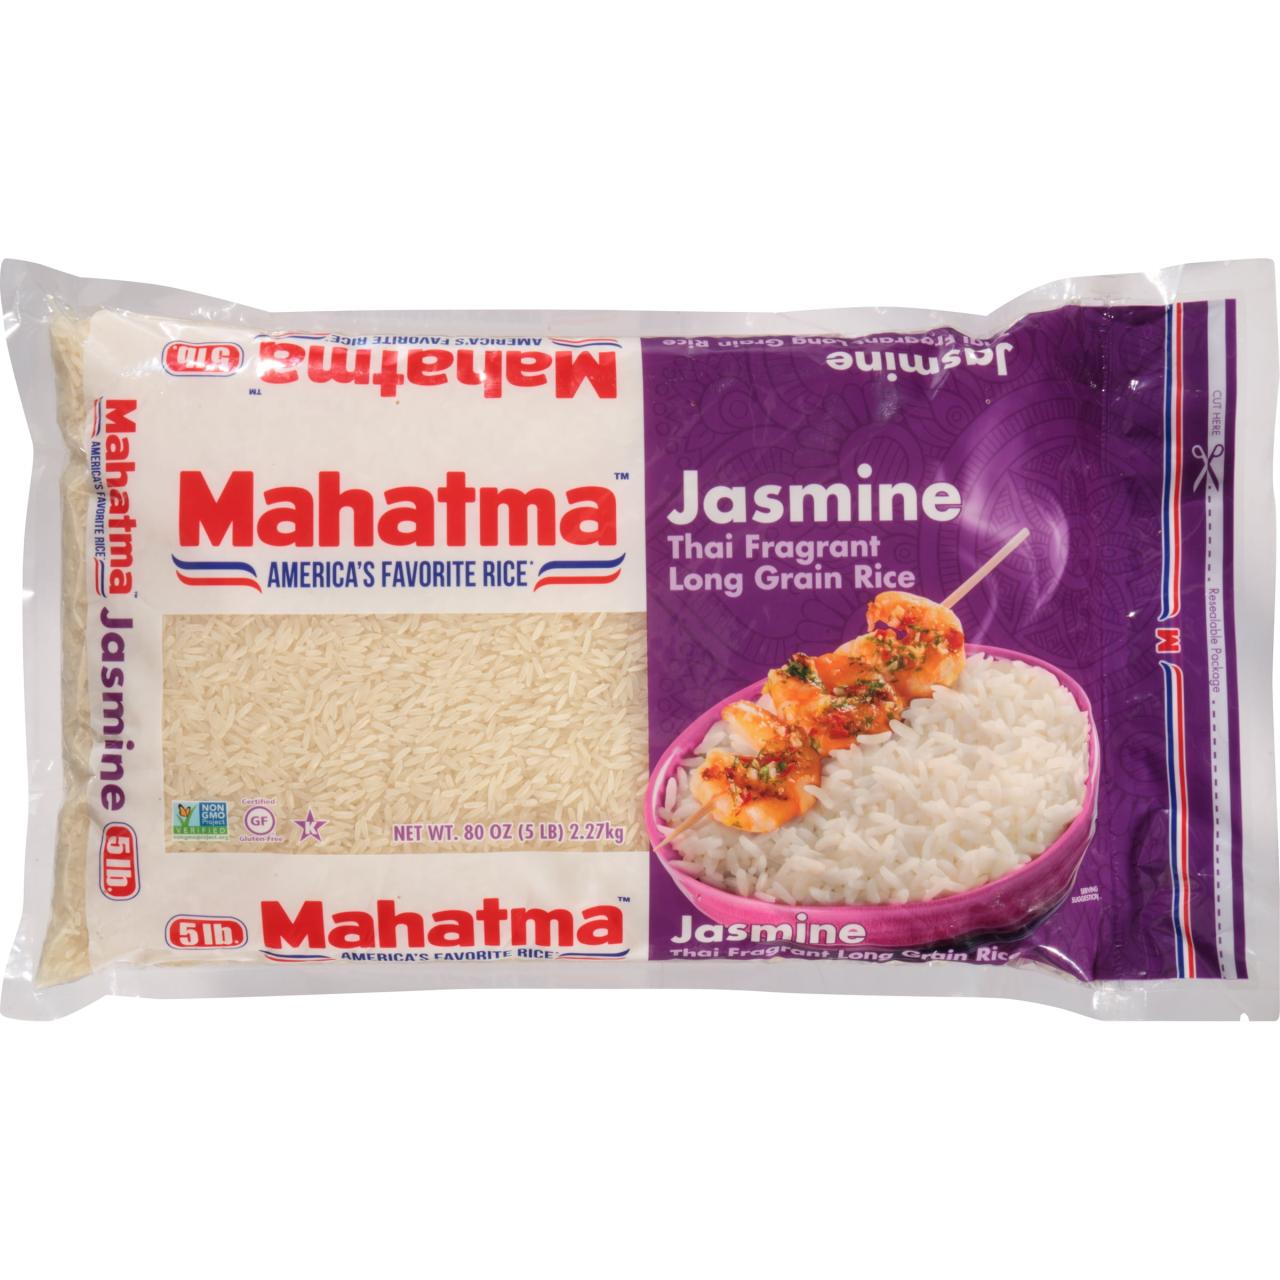 Basmati serve grain facts flavored medley minuterice